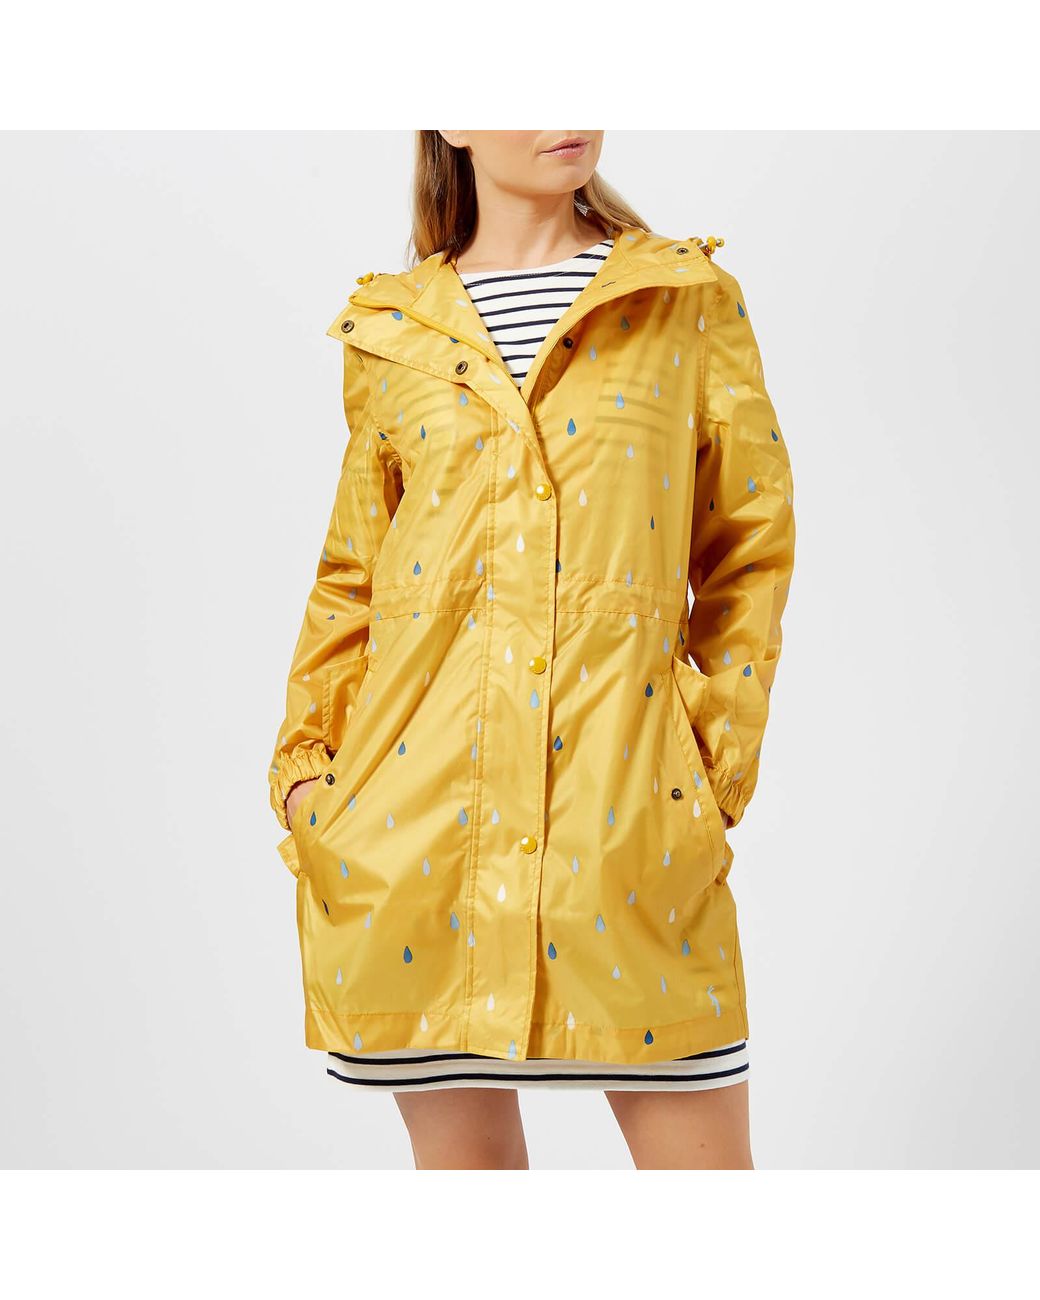 Joules Golightly Waterproof Packaway Coat in Yellow | Lyst Australia